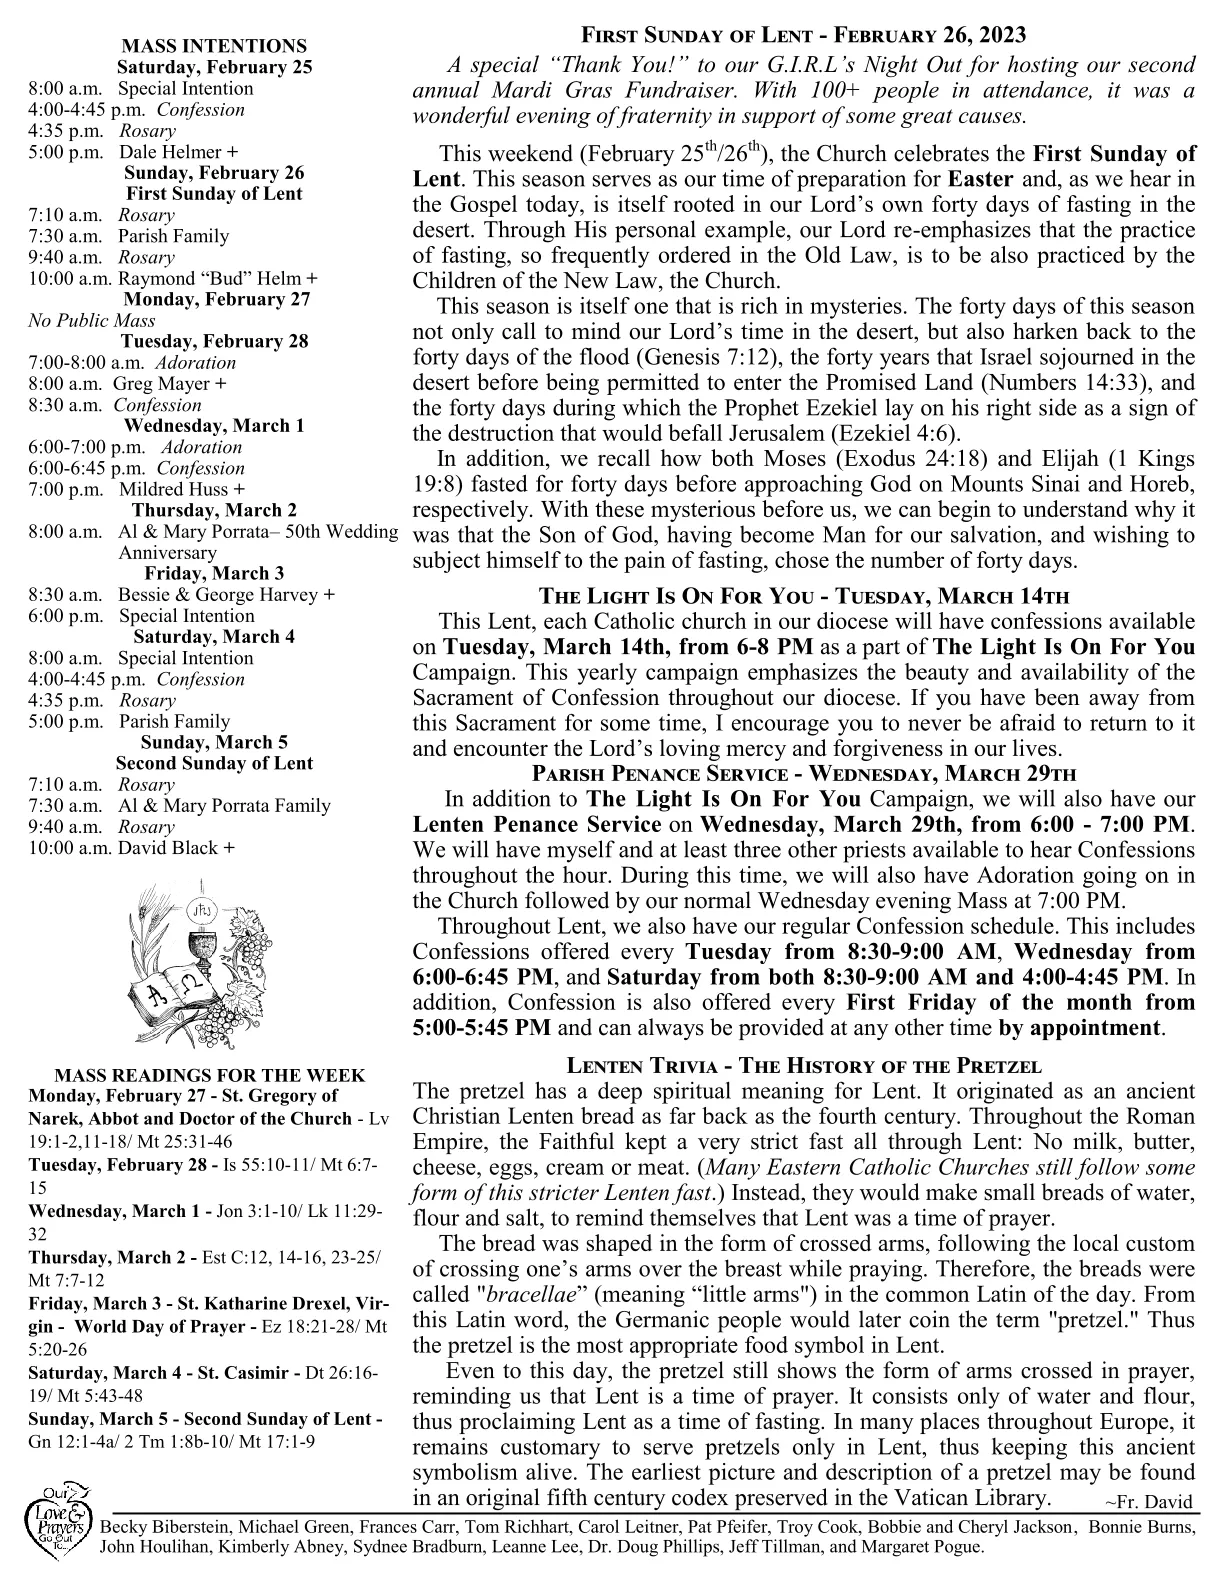 Feb 26, 2023 - Bulletin - Page 2